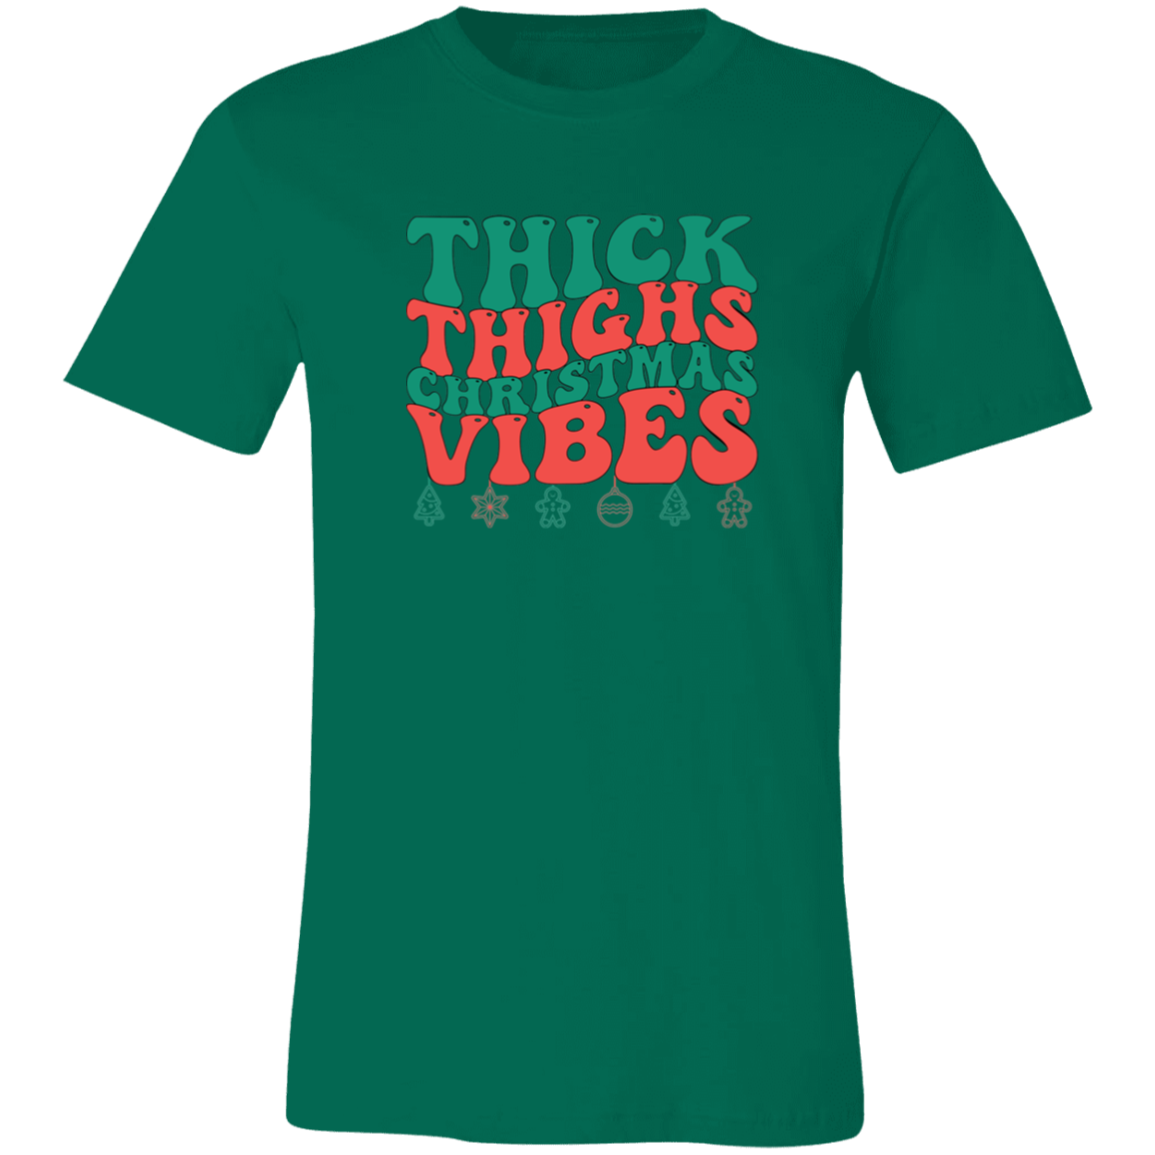 Thick Thighs Christmas Vibes Shirt